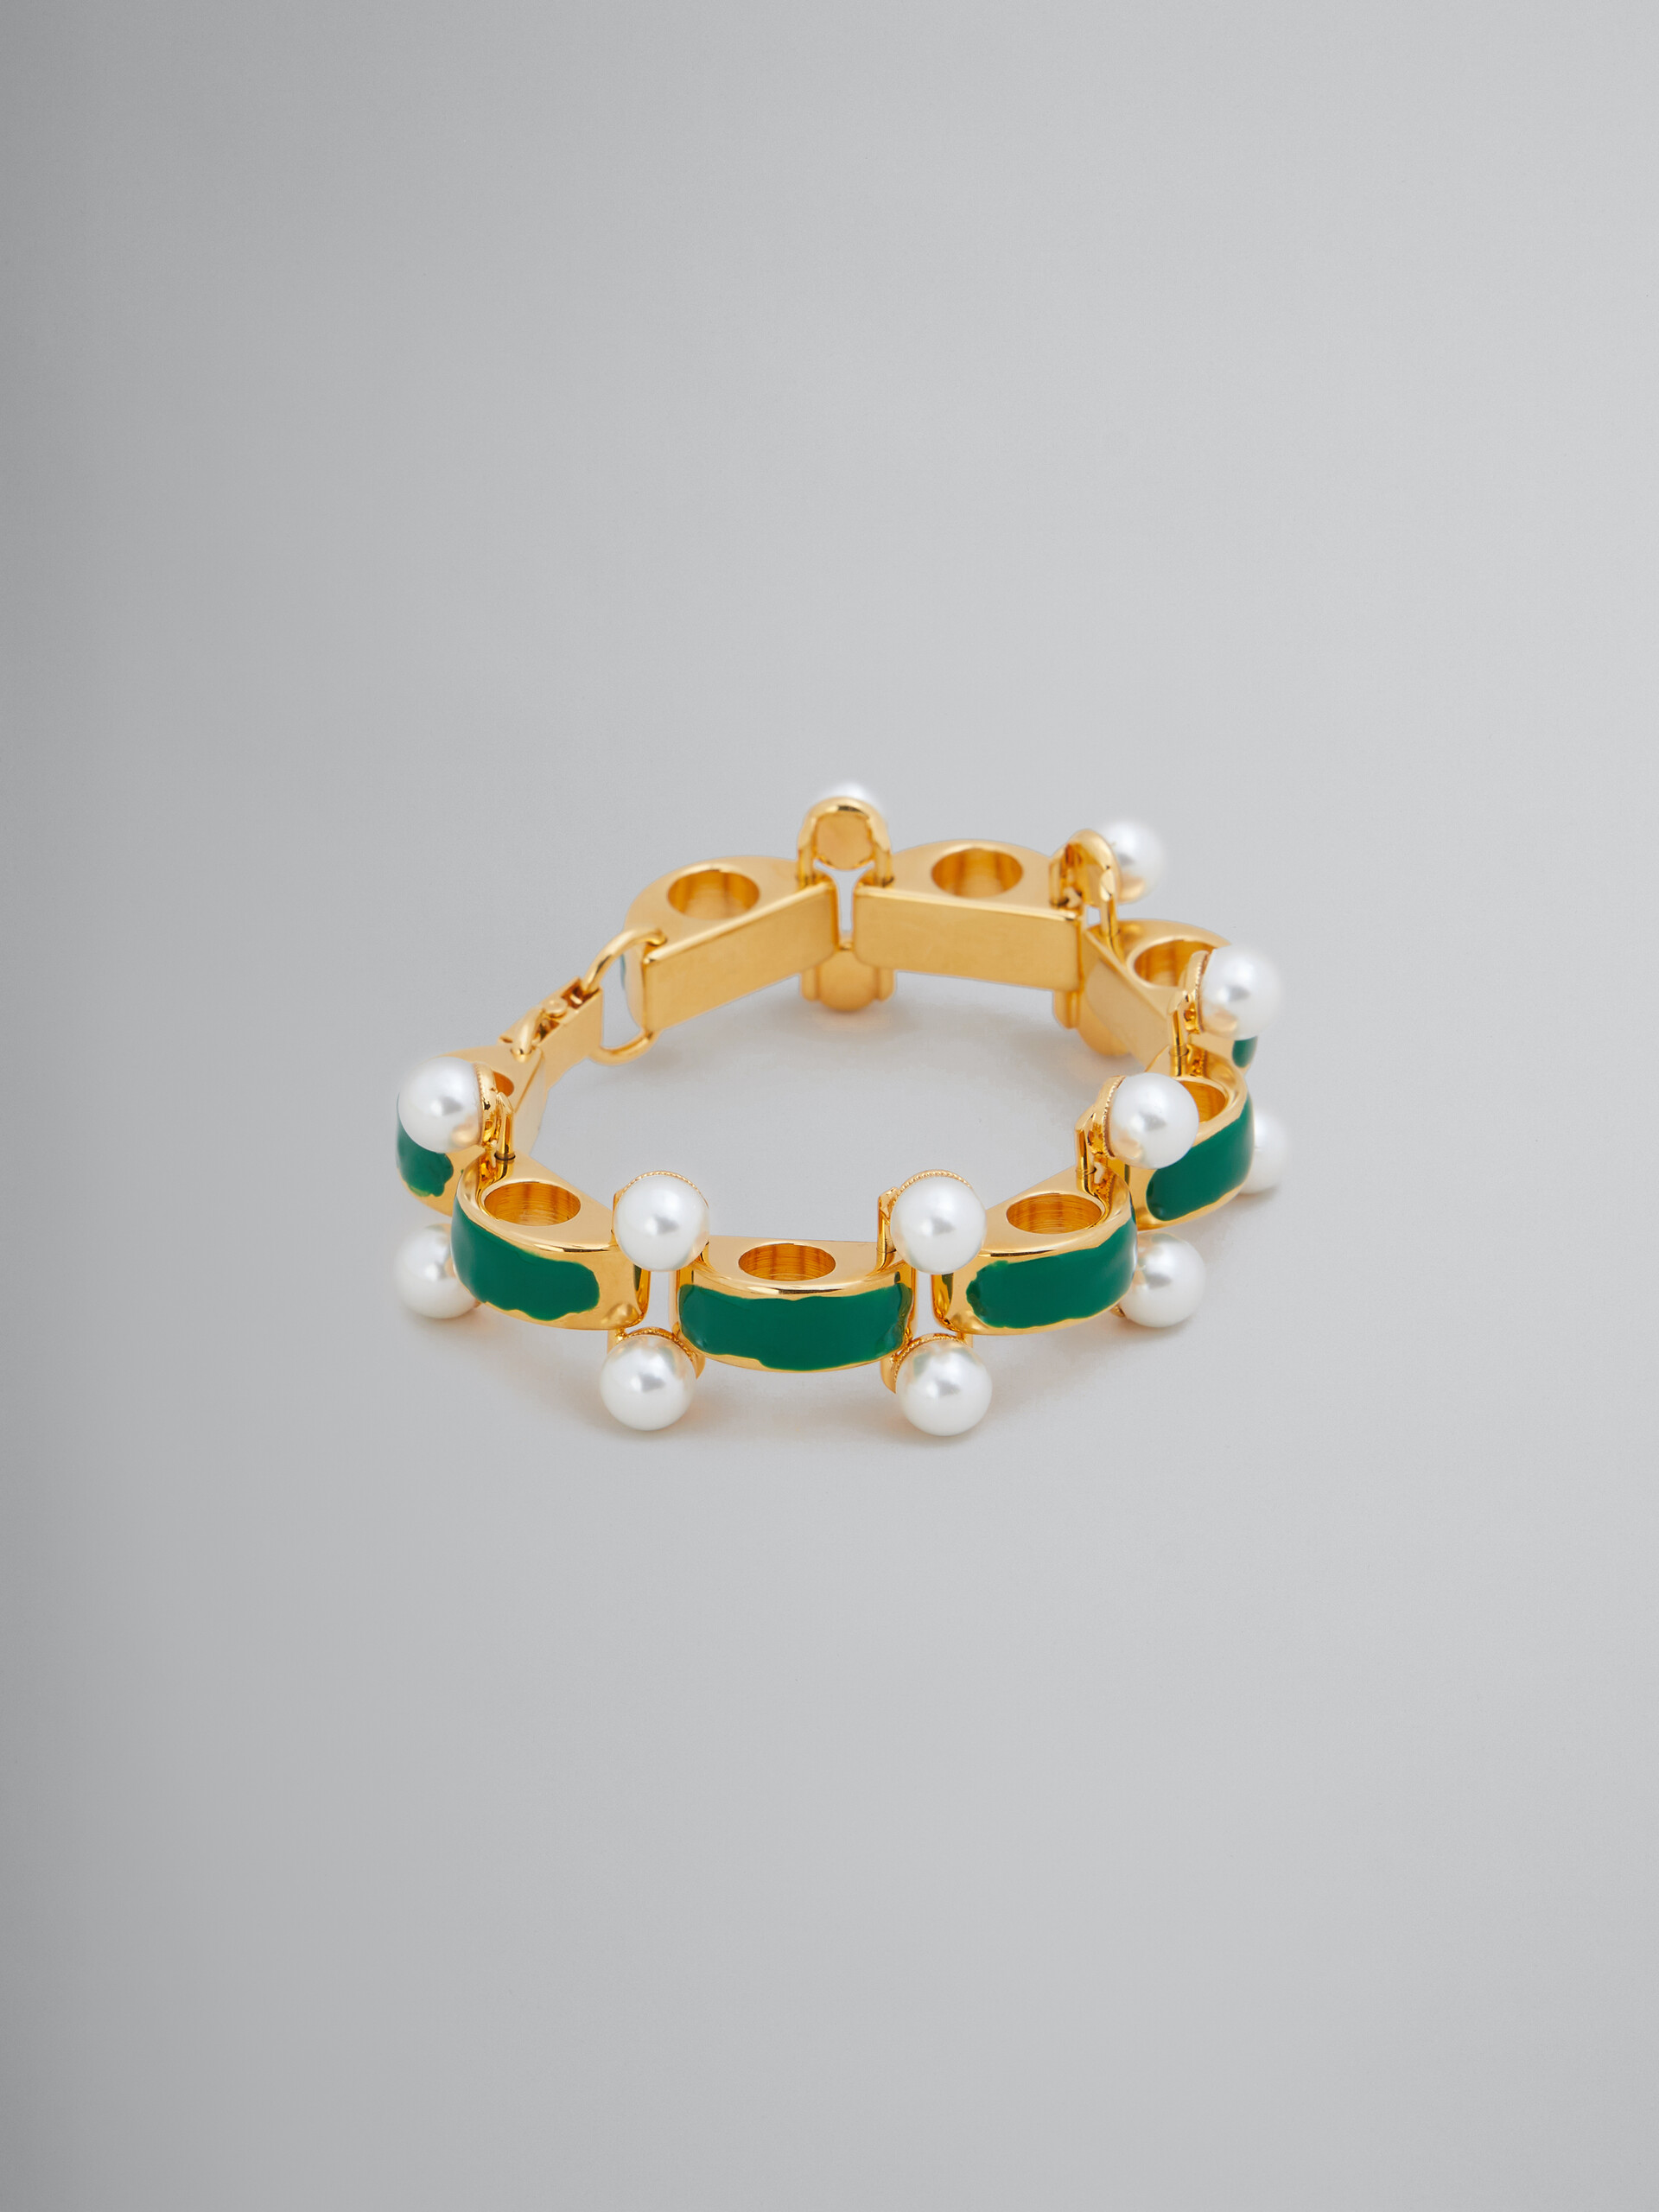 Scalloped bracelet with pearl details - Bracelets - Image 1